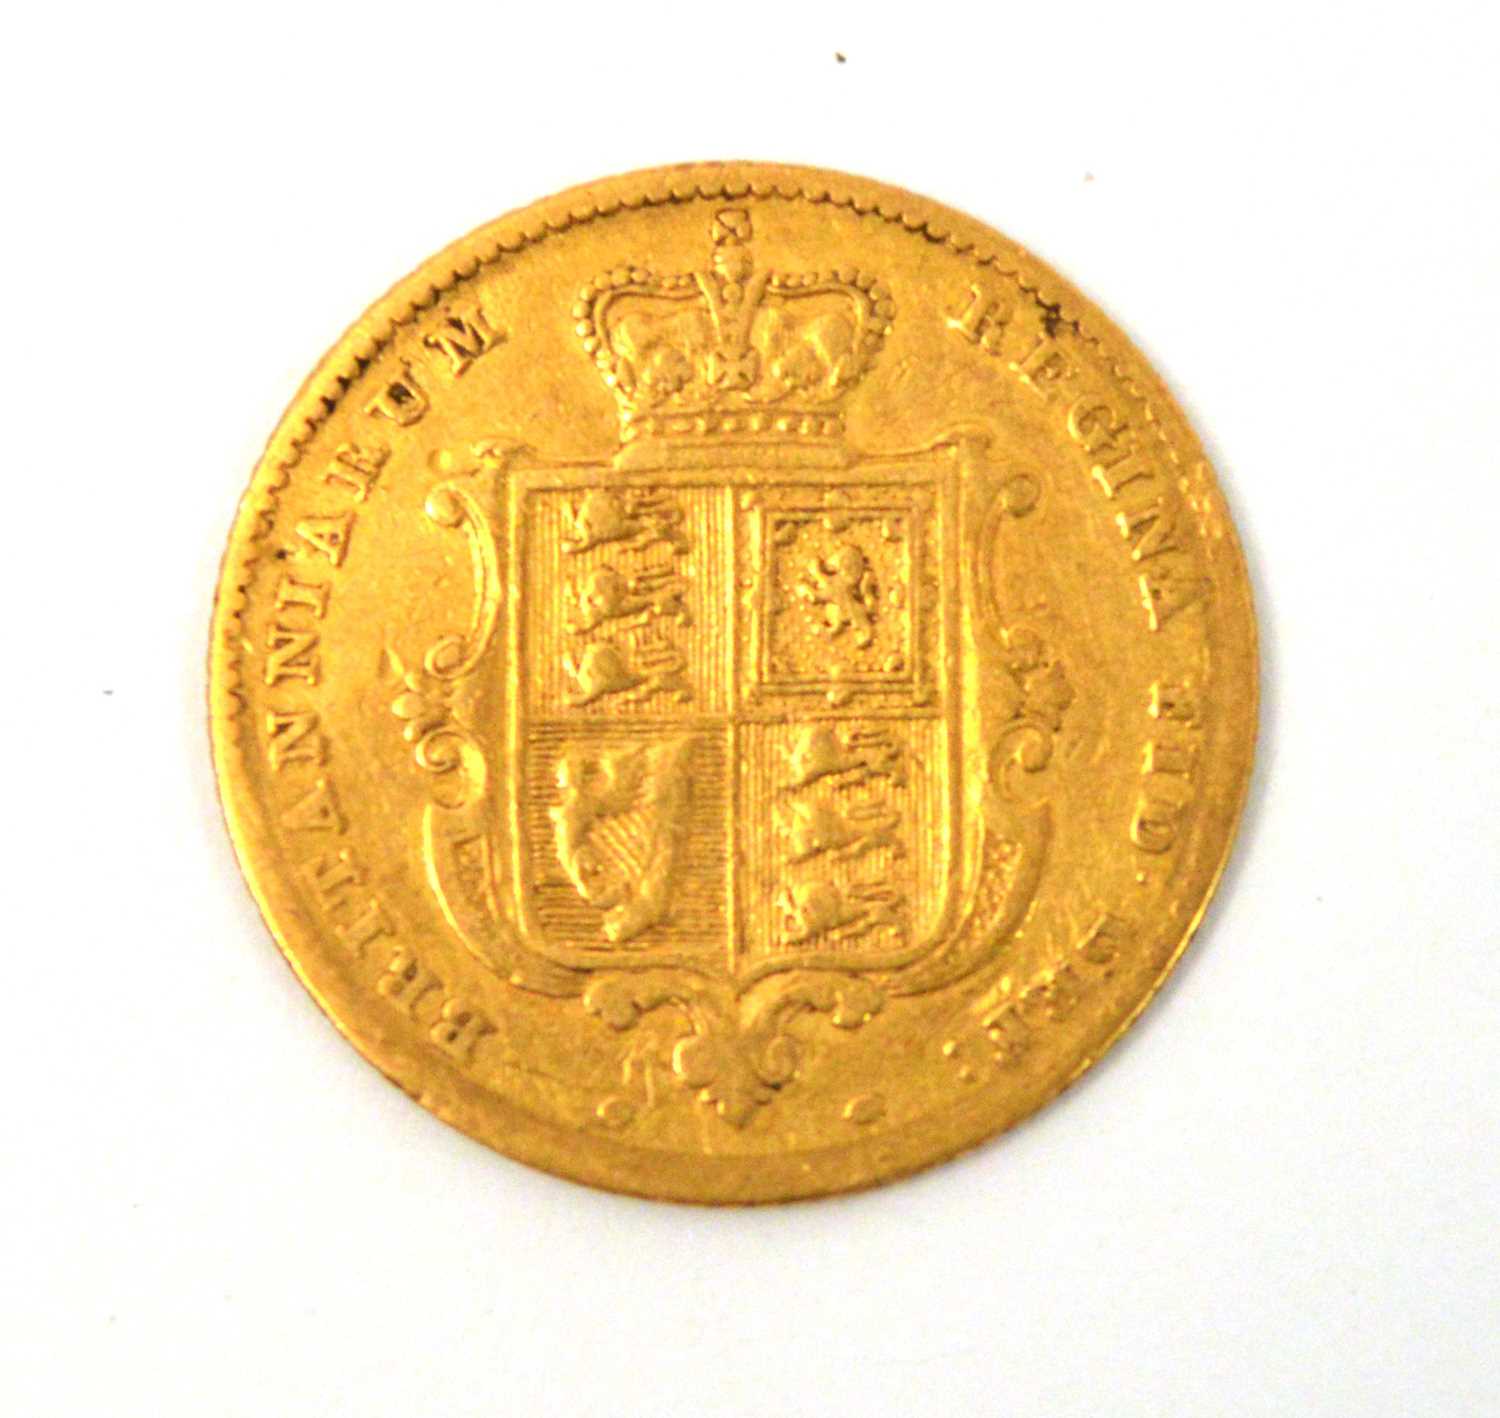 Lot 111 - A Queen Victoria gold half sovereign, 1840.